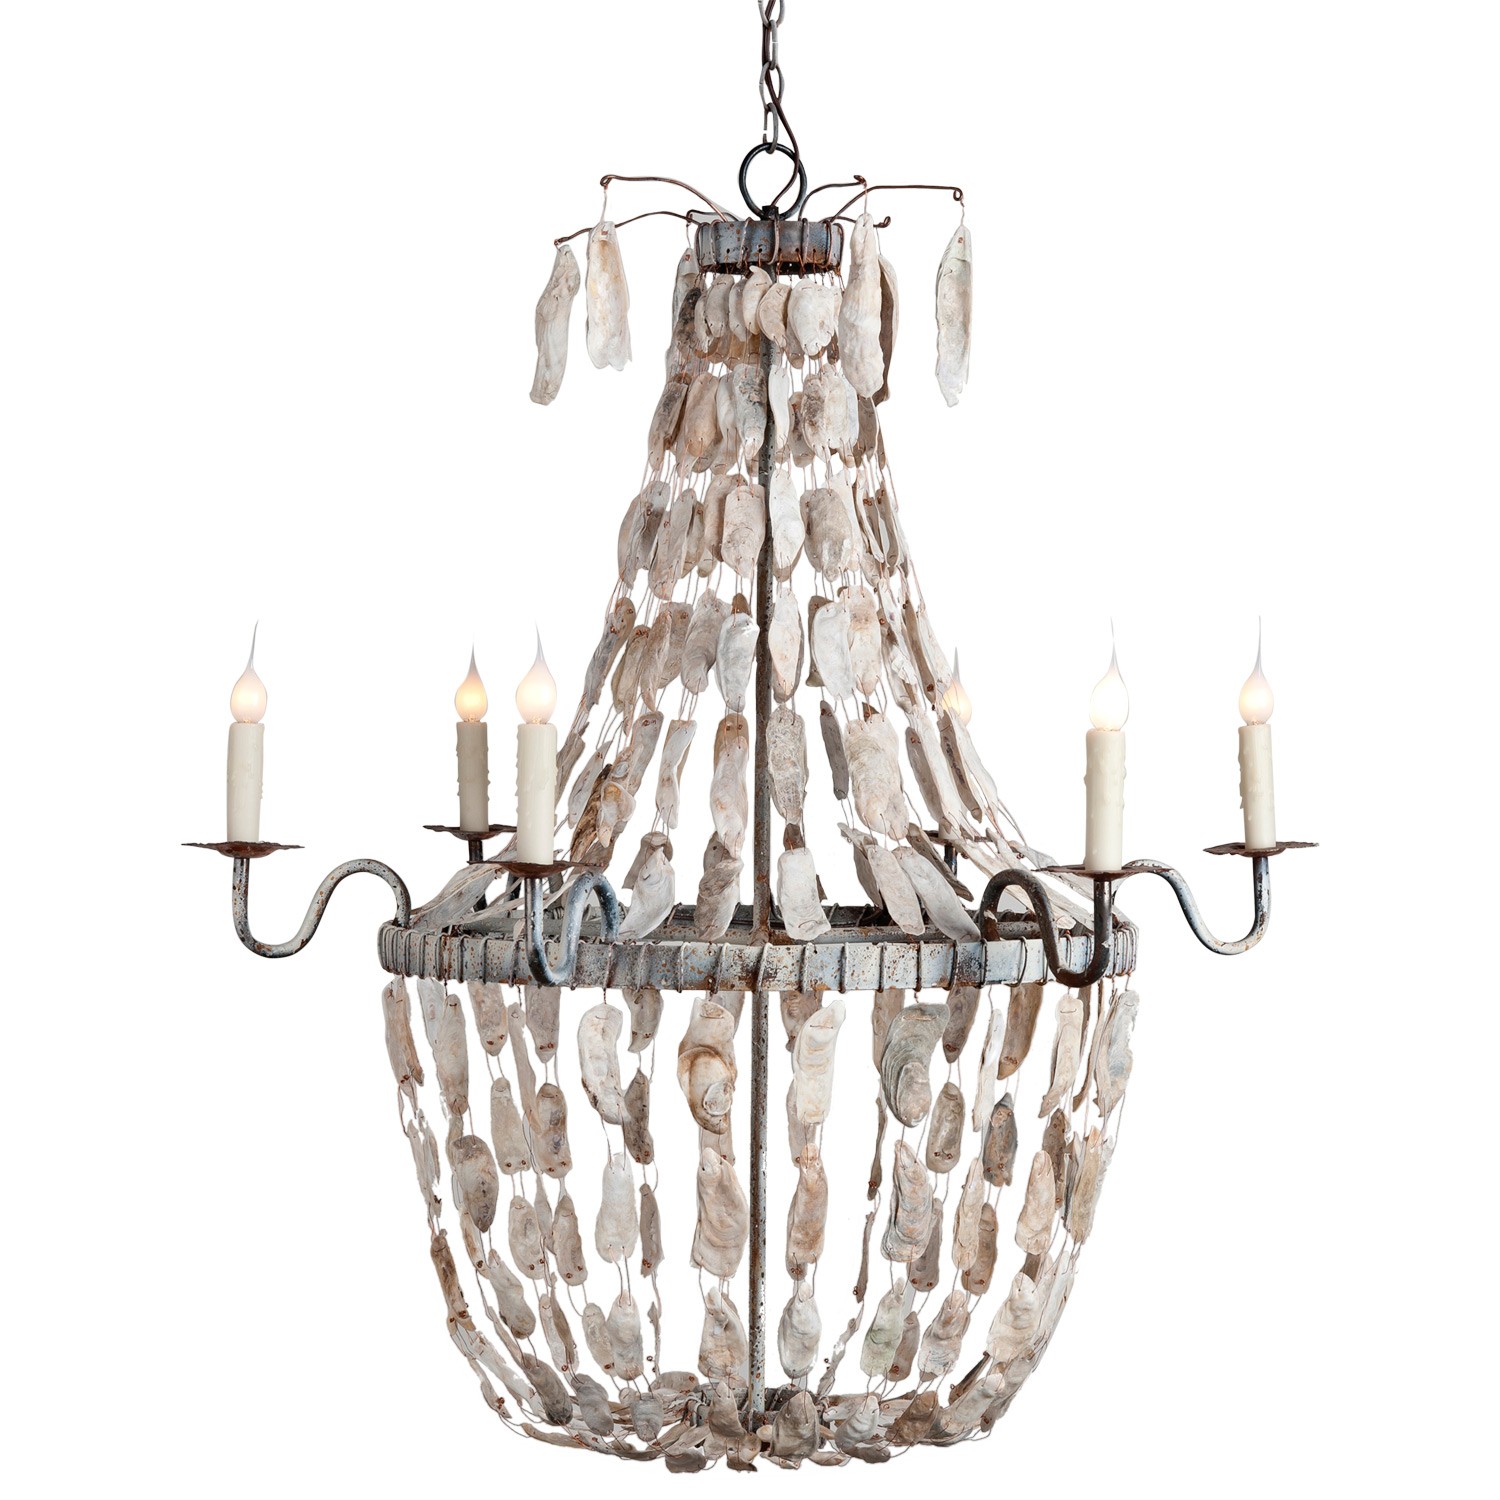 Oyster shell chandelier ideas homesfeed